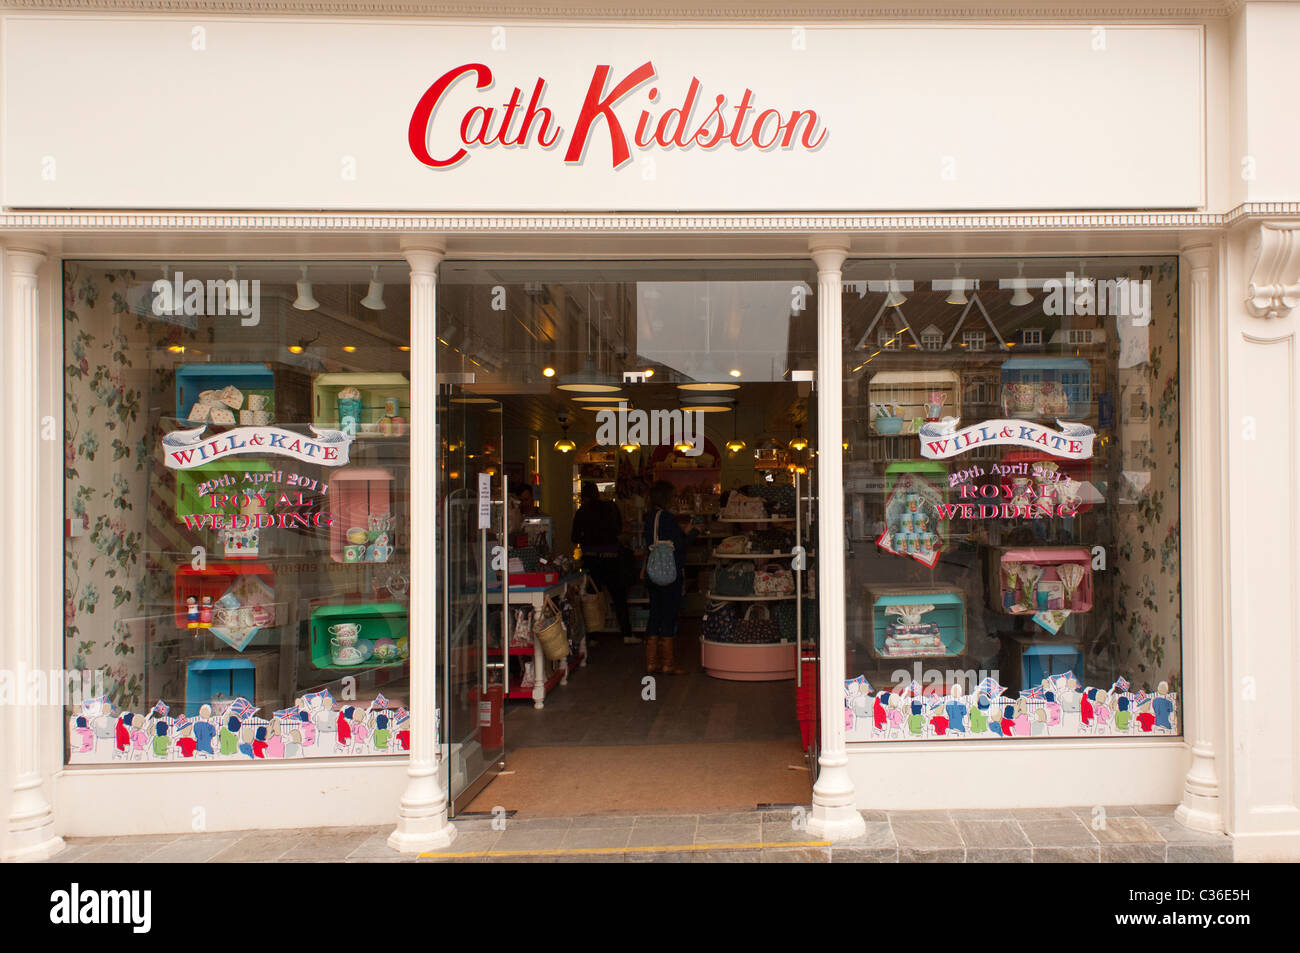 cath kidston shops